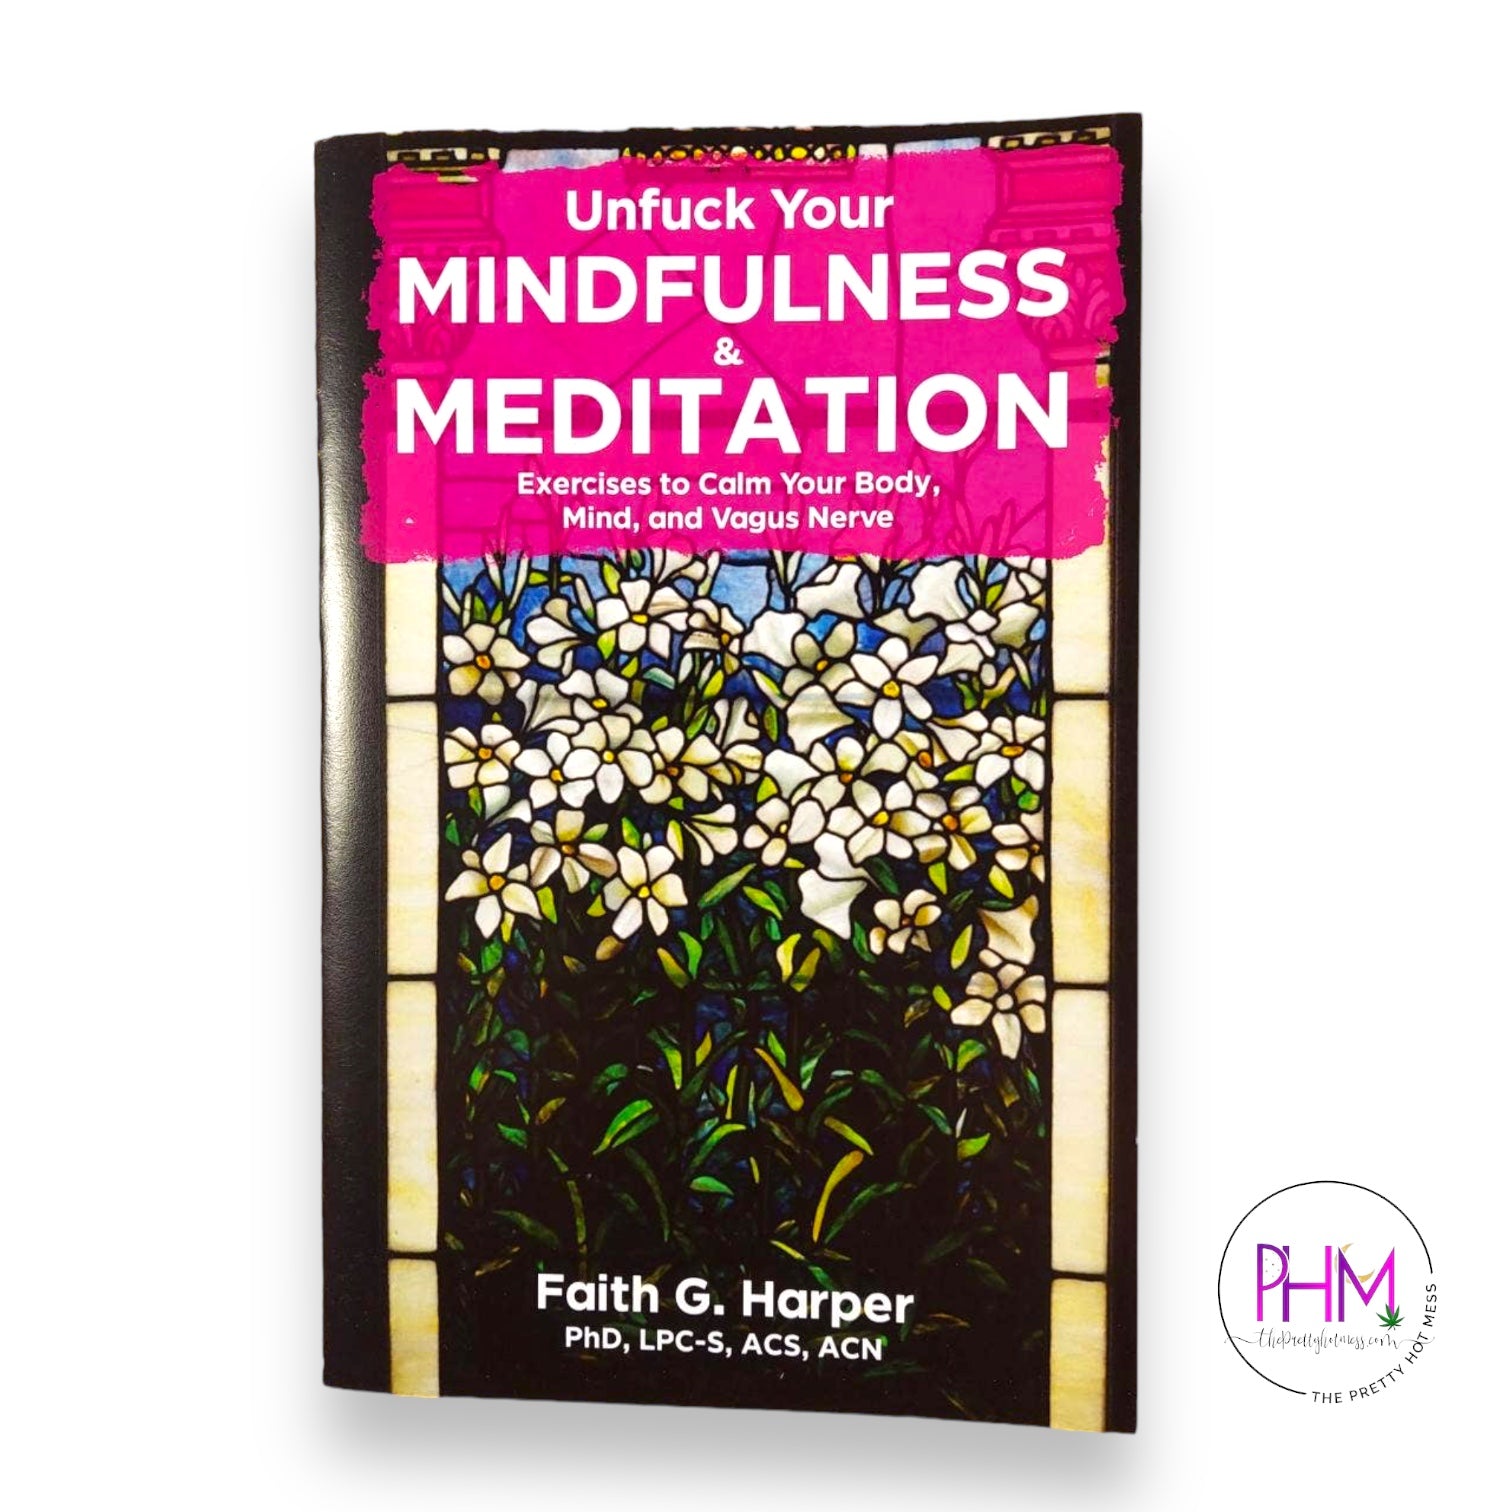 Unfuck Your Mindfulness & Meditation